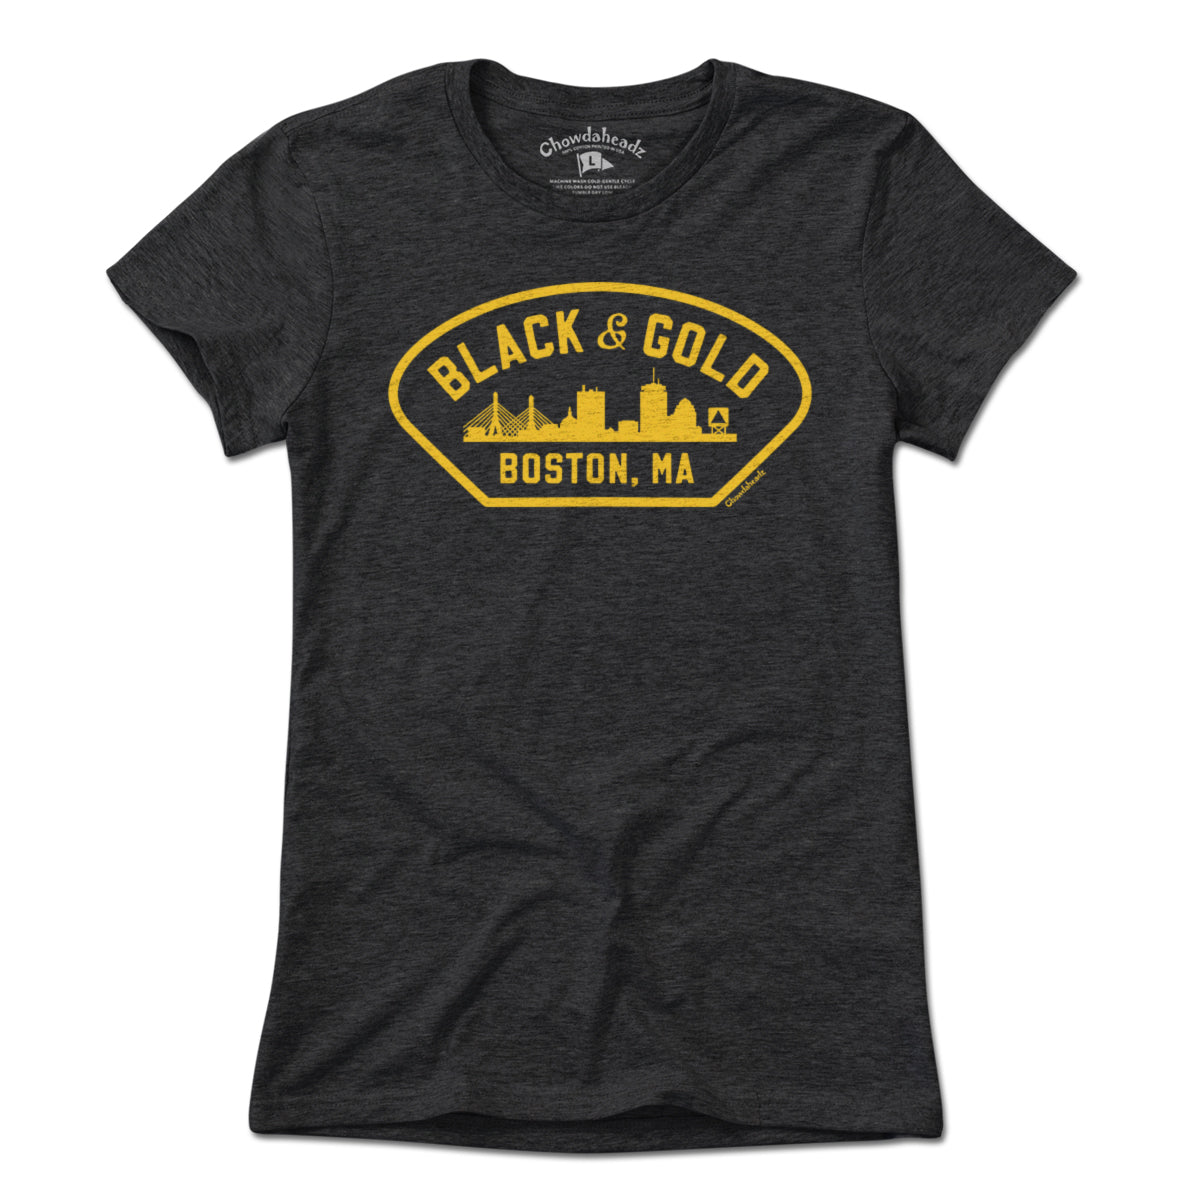 Black & Gold Boston Naval T-Shirt - Chowdaheadz